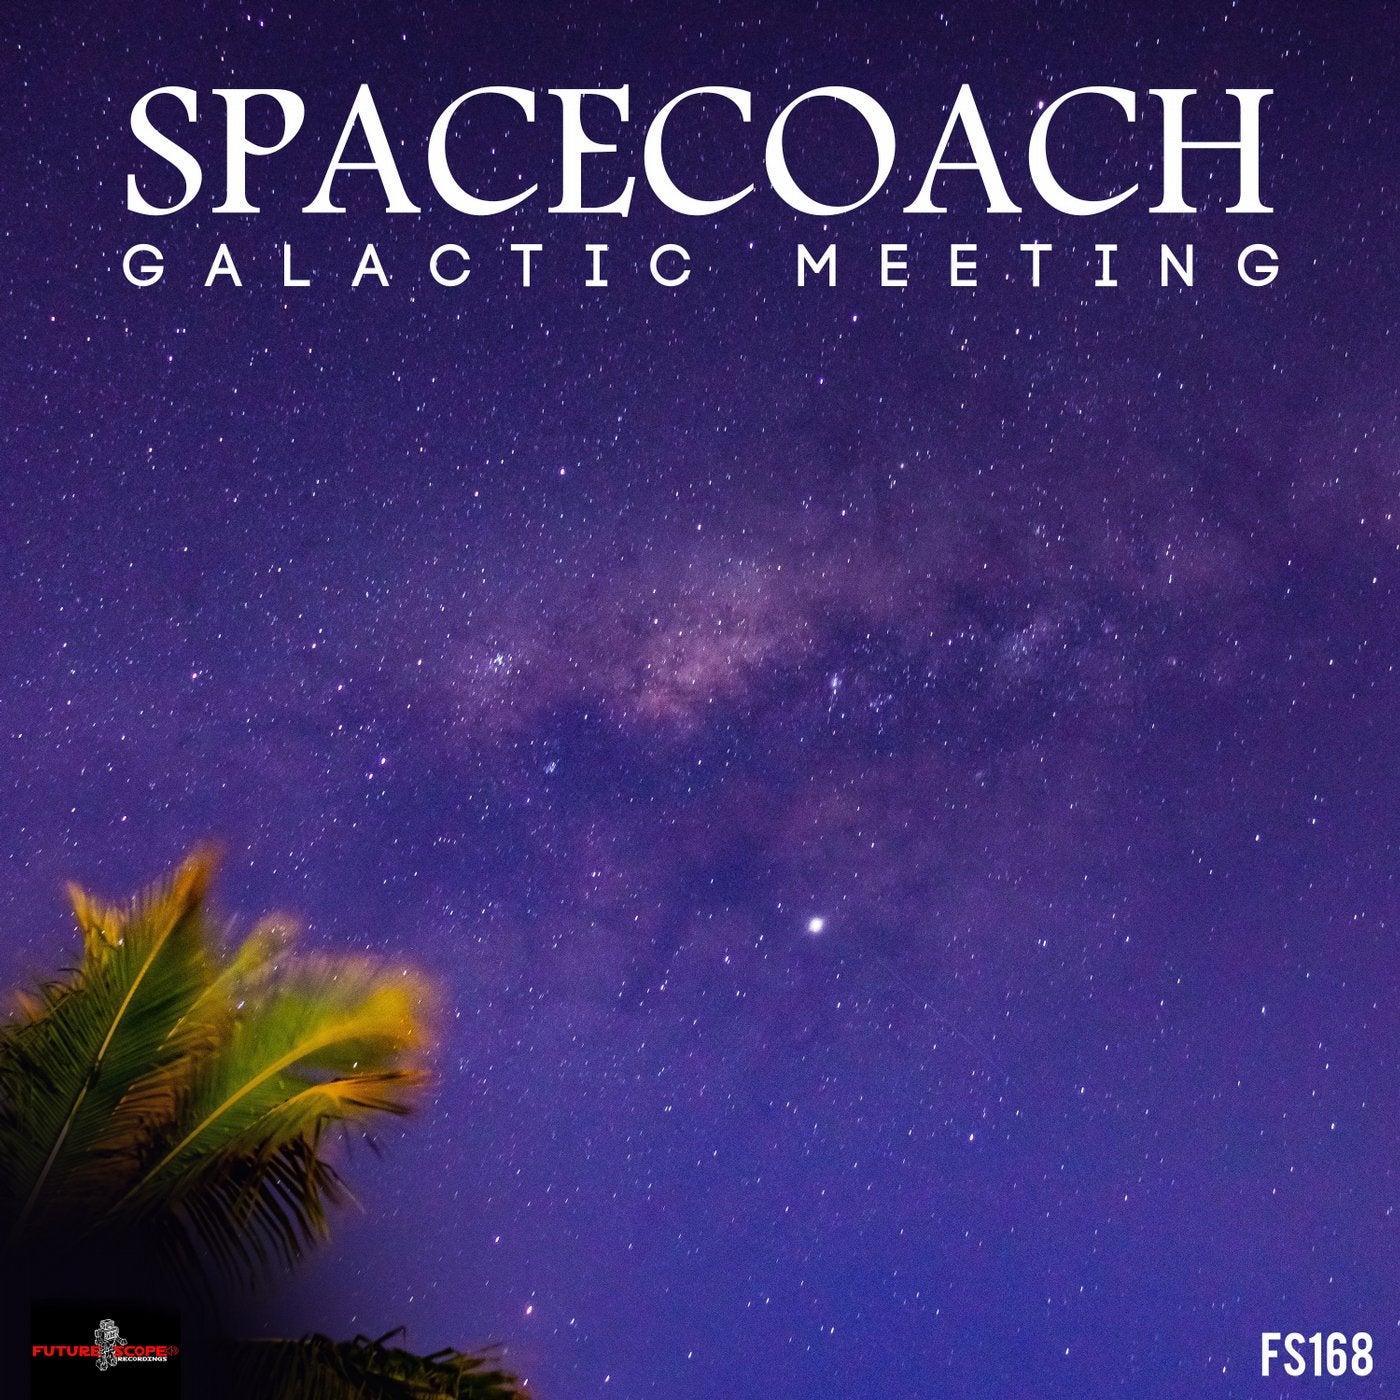 Galaxy Meeting